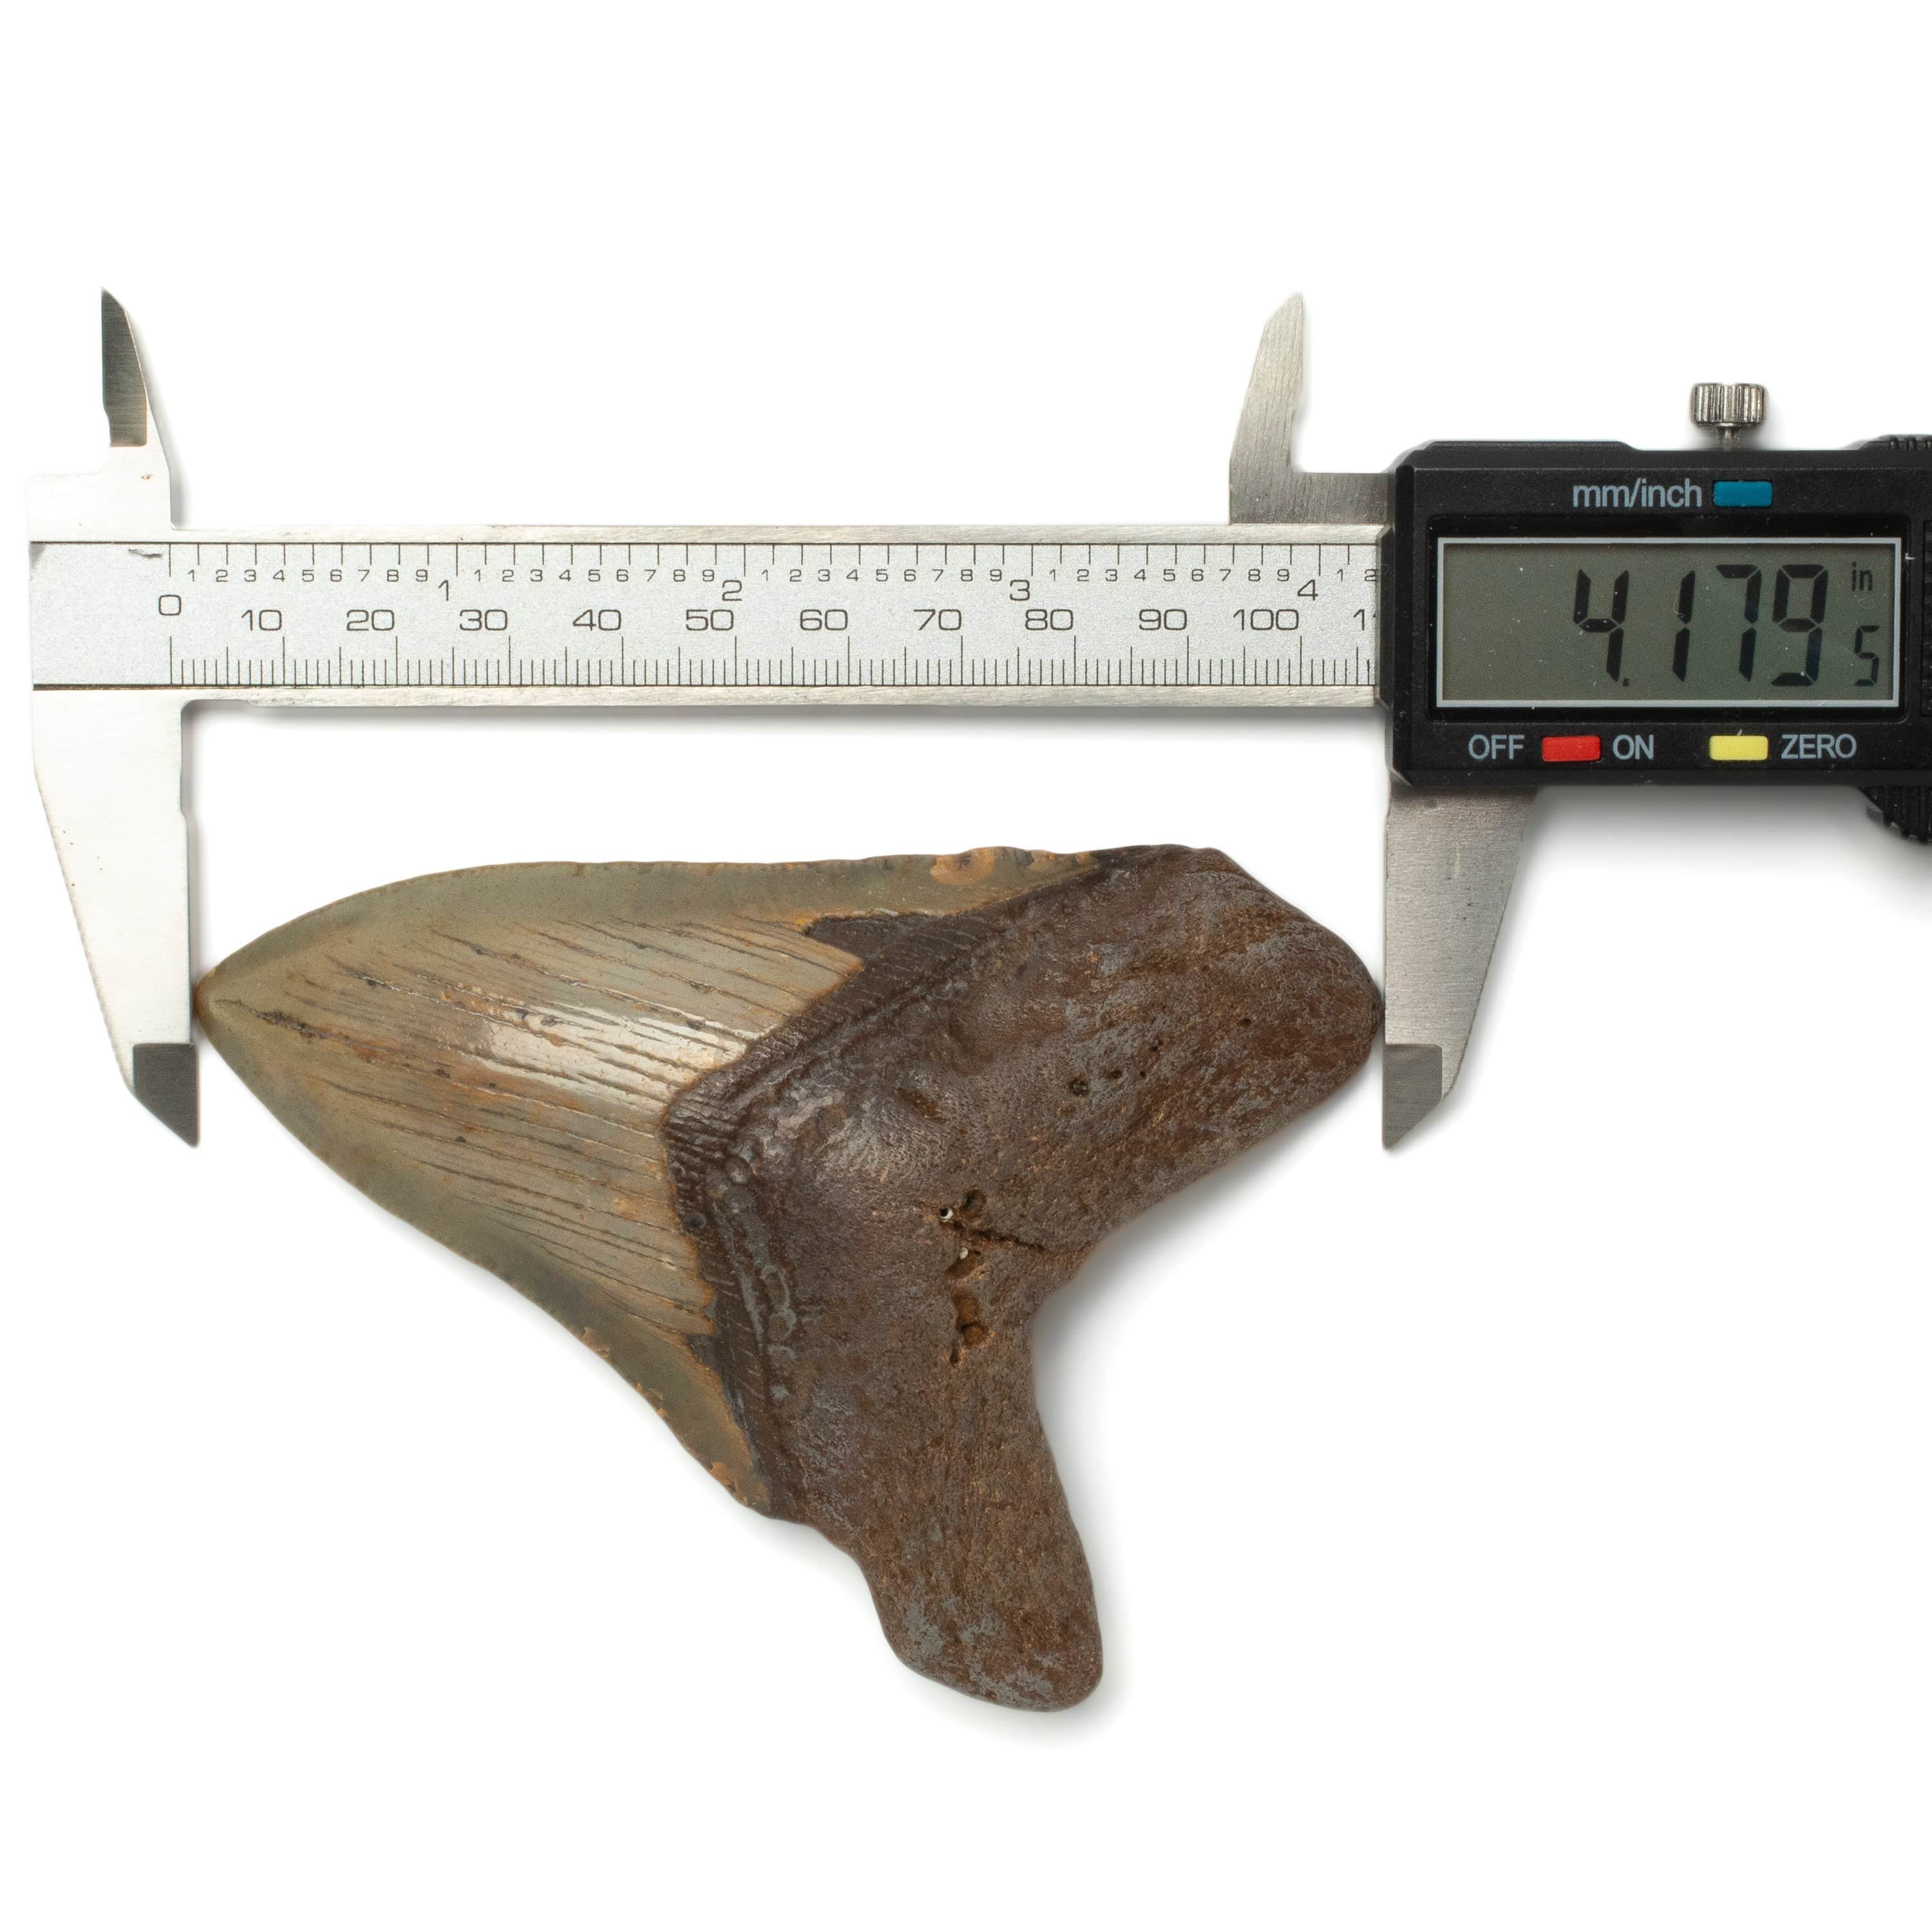 Kalifano Megalodon Teeth Megalodon Tooth from South Carolina - 4.1" ST1600.023